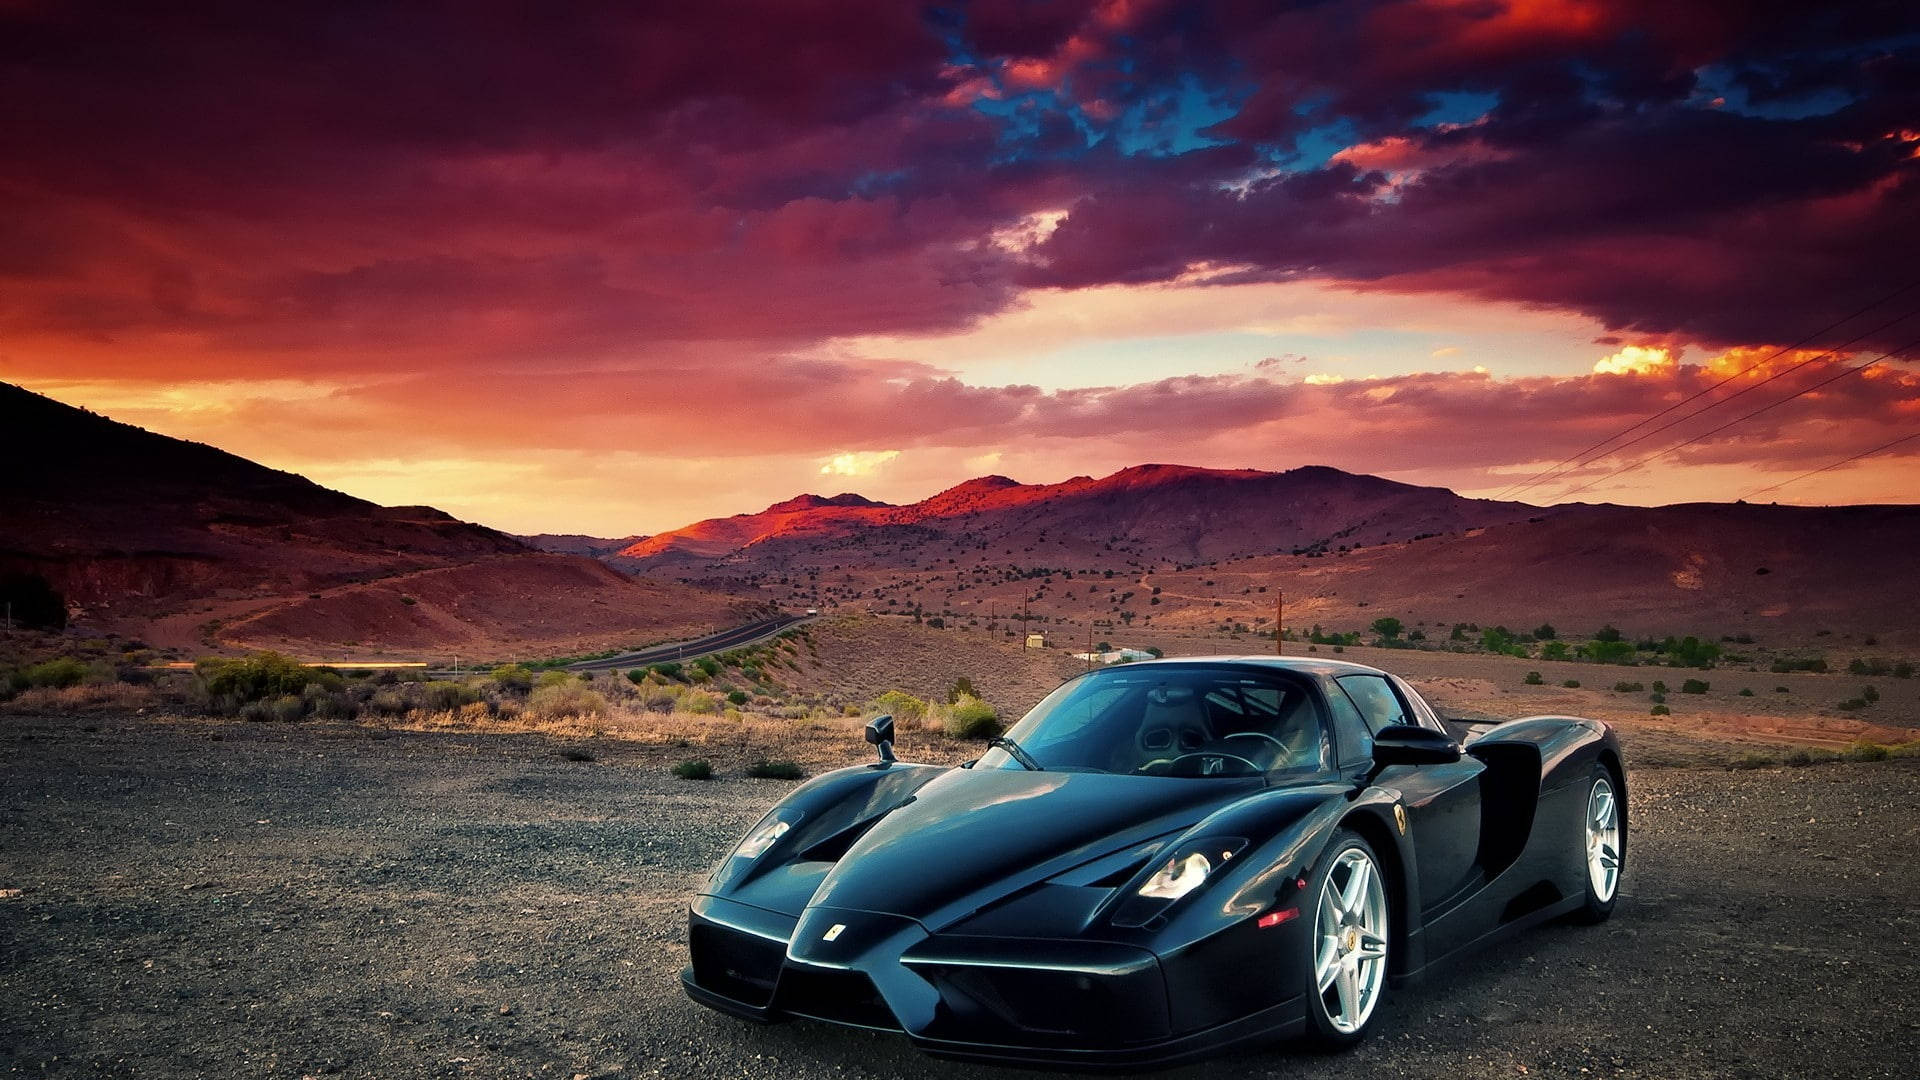 Caption: Power Meets Elegance: Black Ferrari Conquering The Barren Land On An Ipad Screen Wallpaper